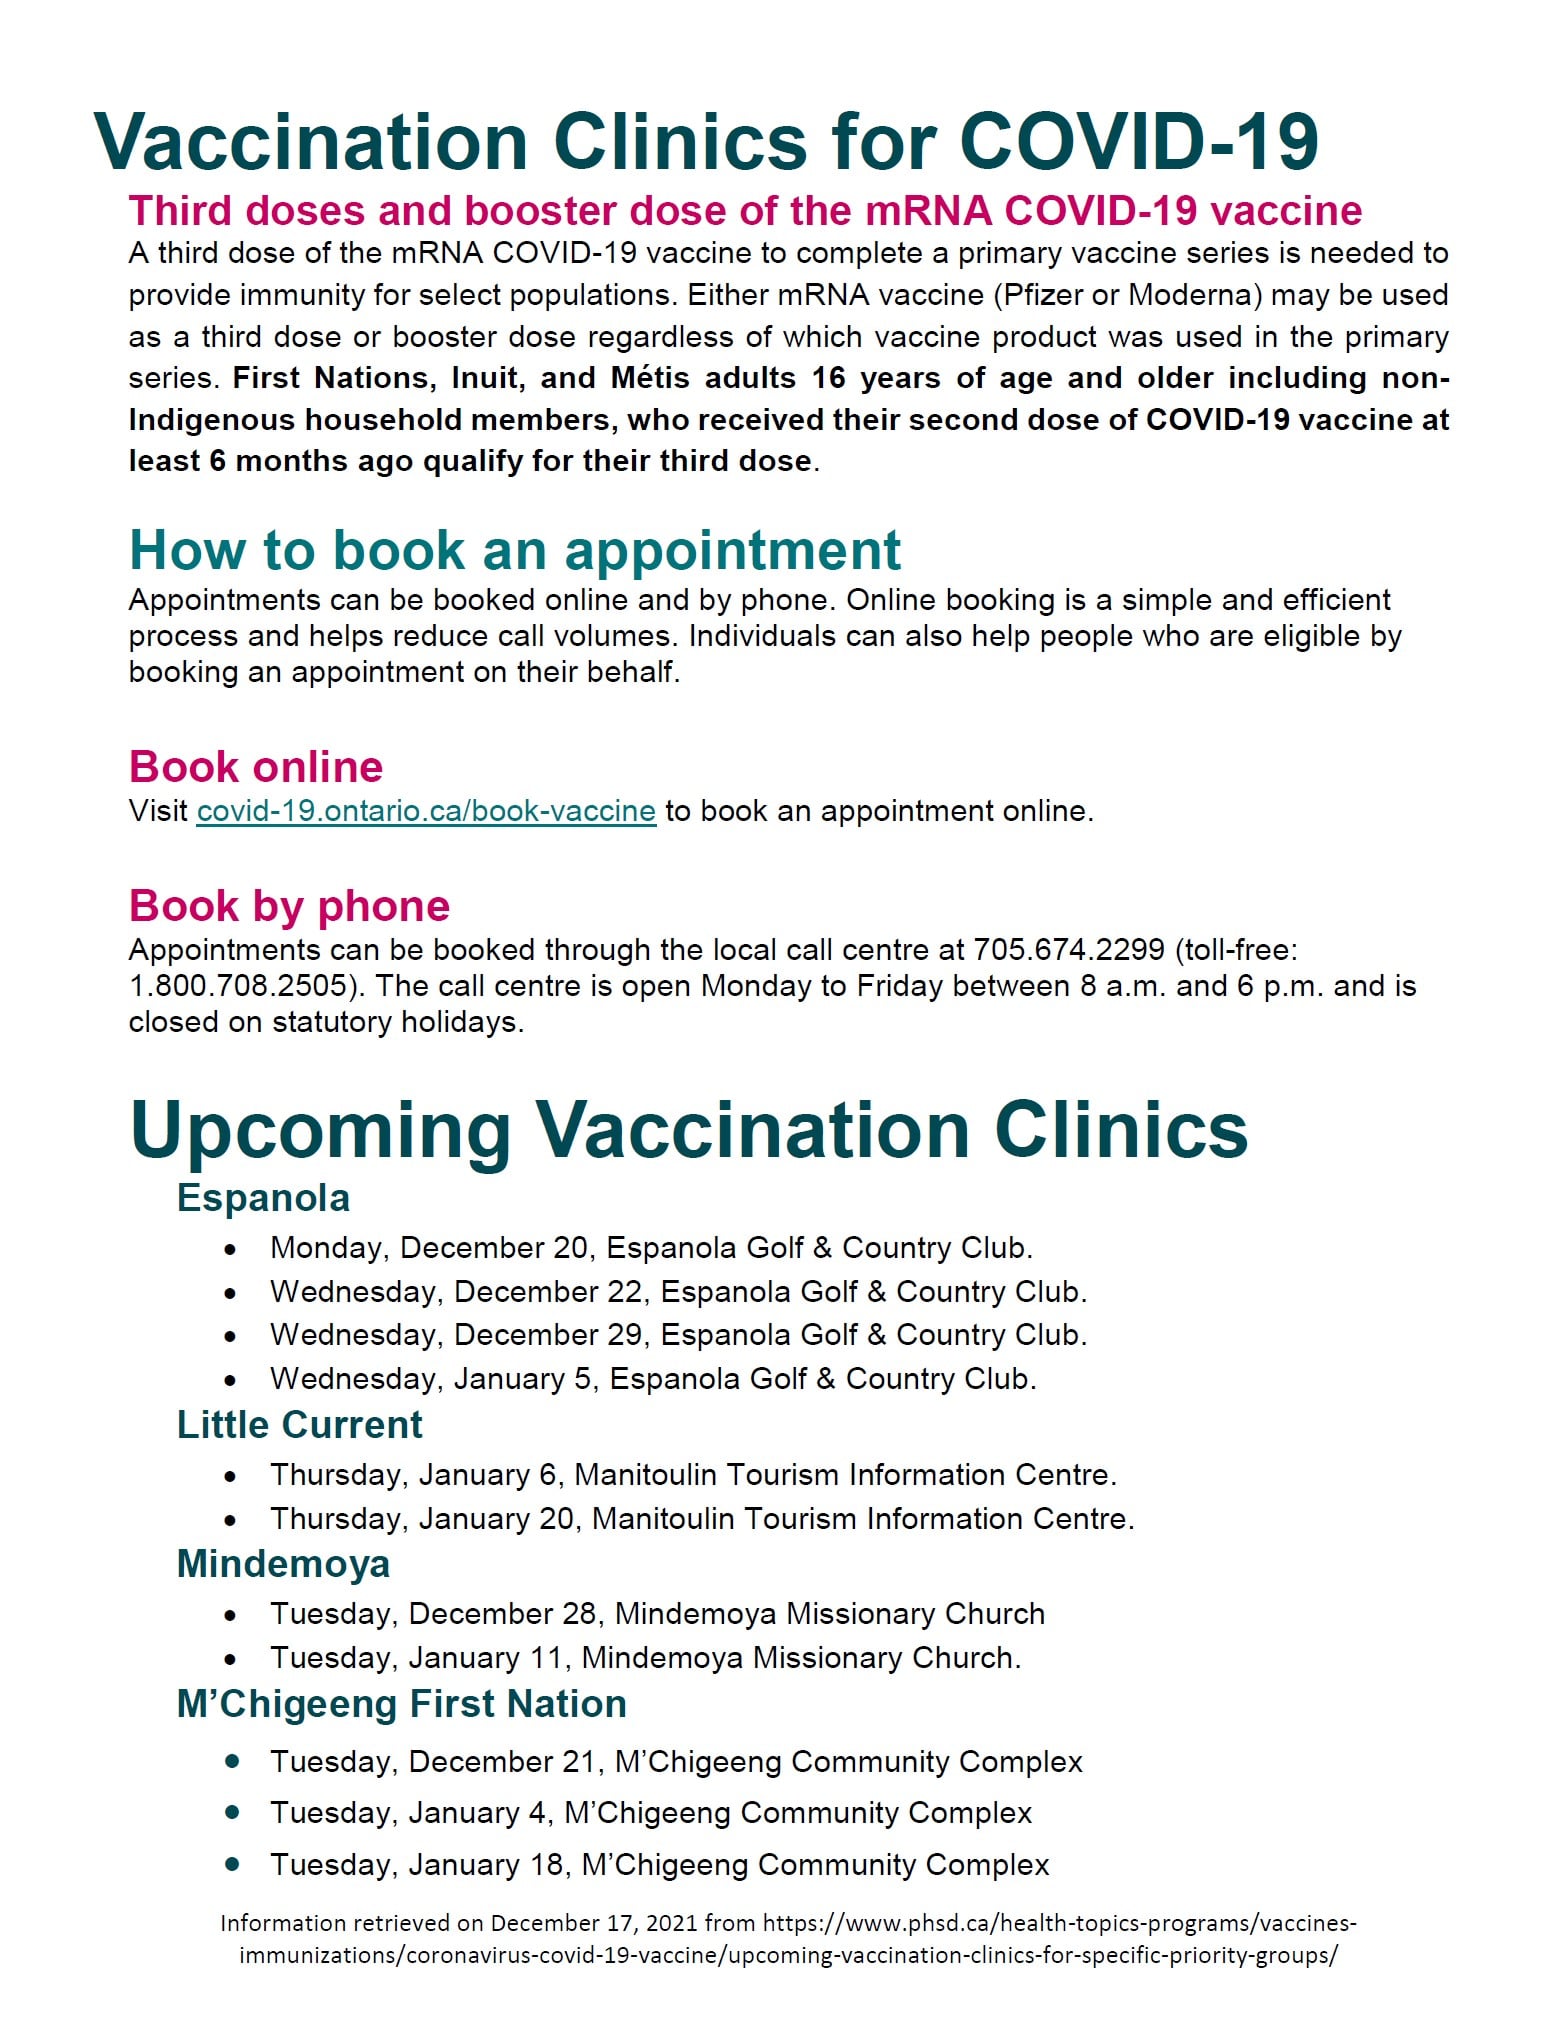 Upcoming Vaccination Clinics